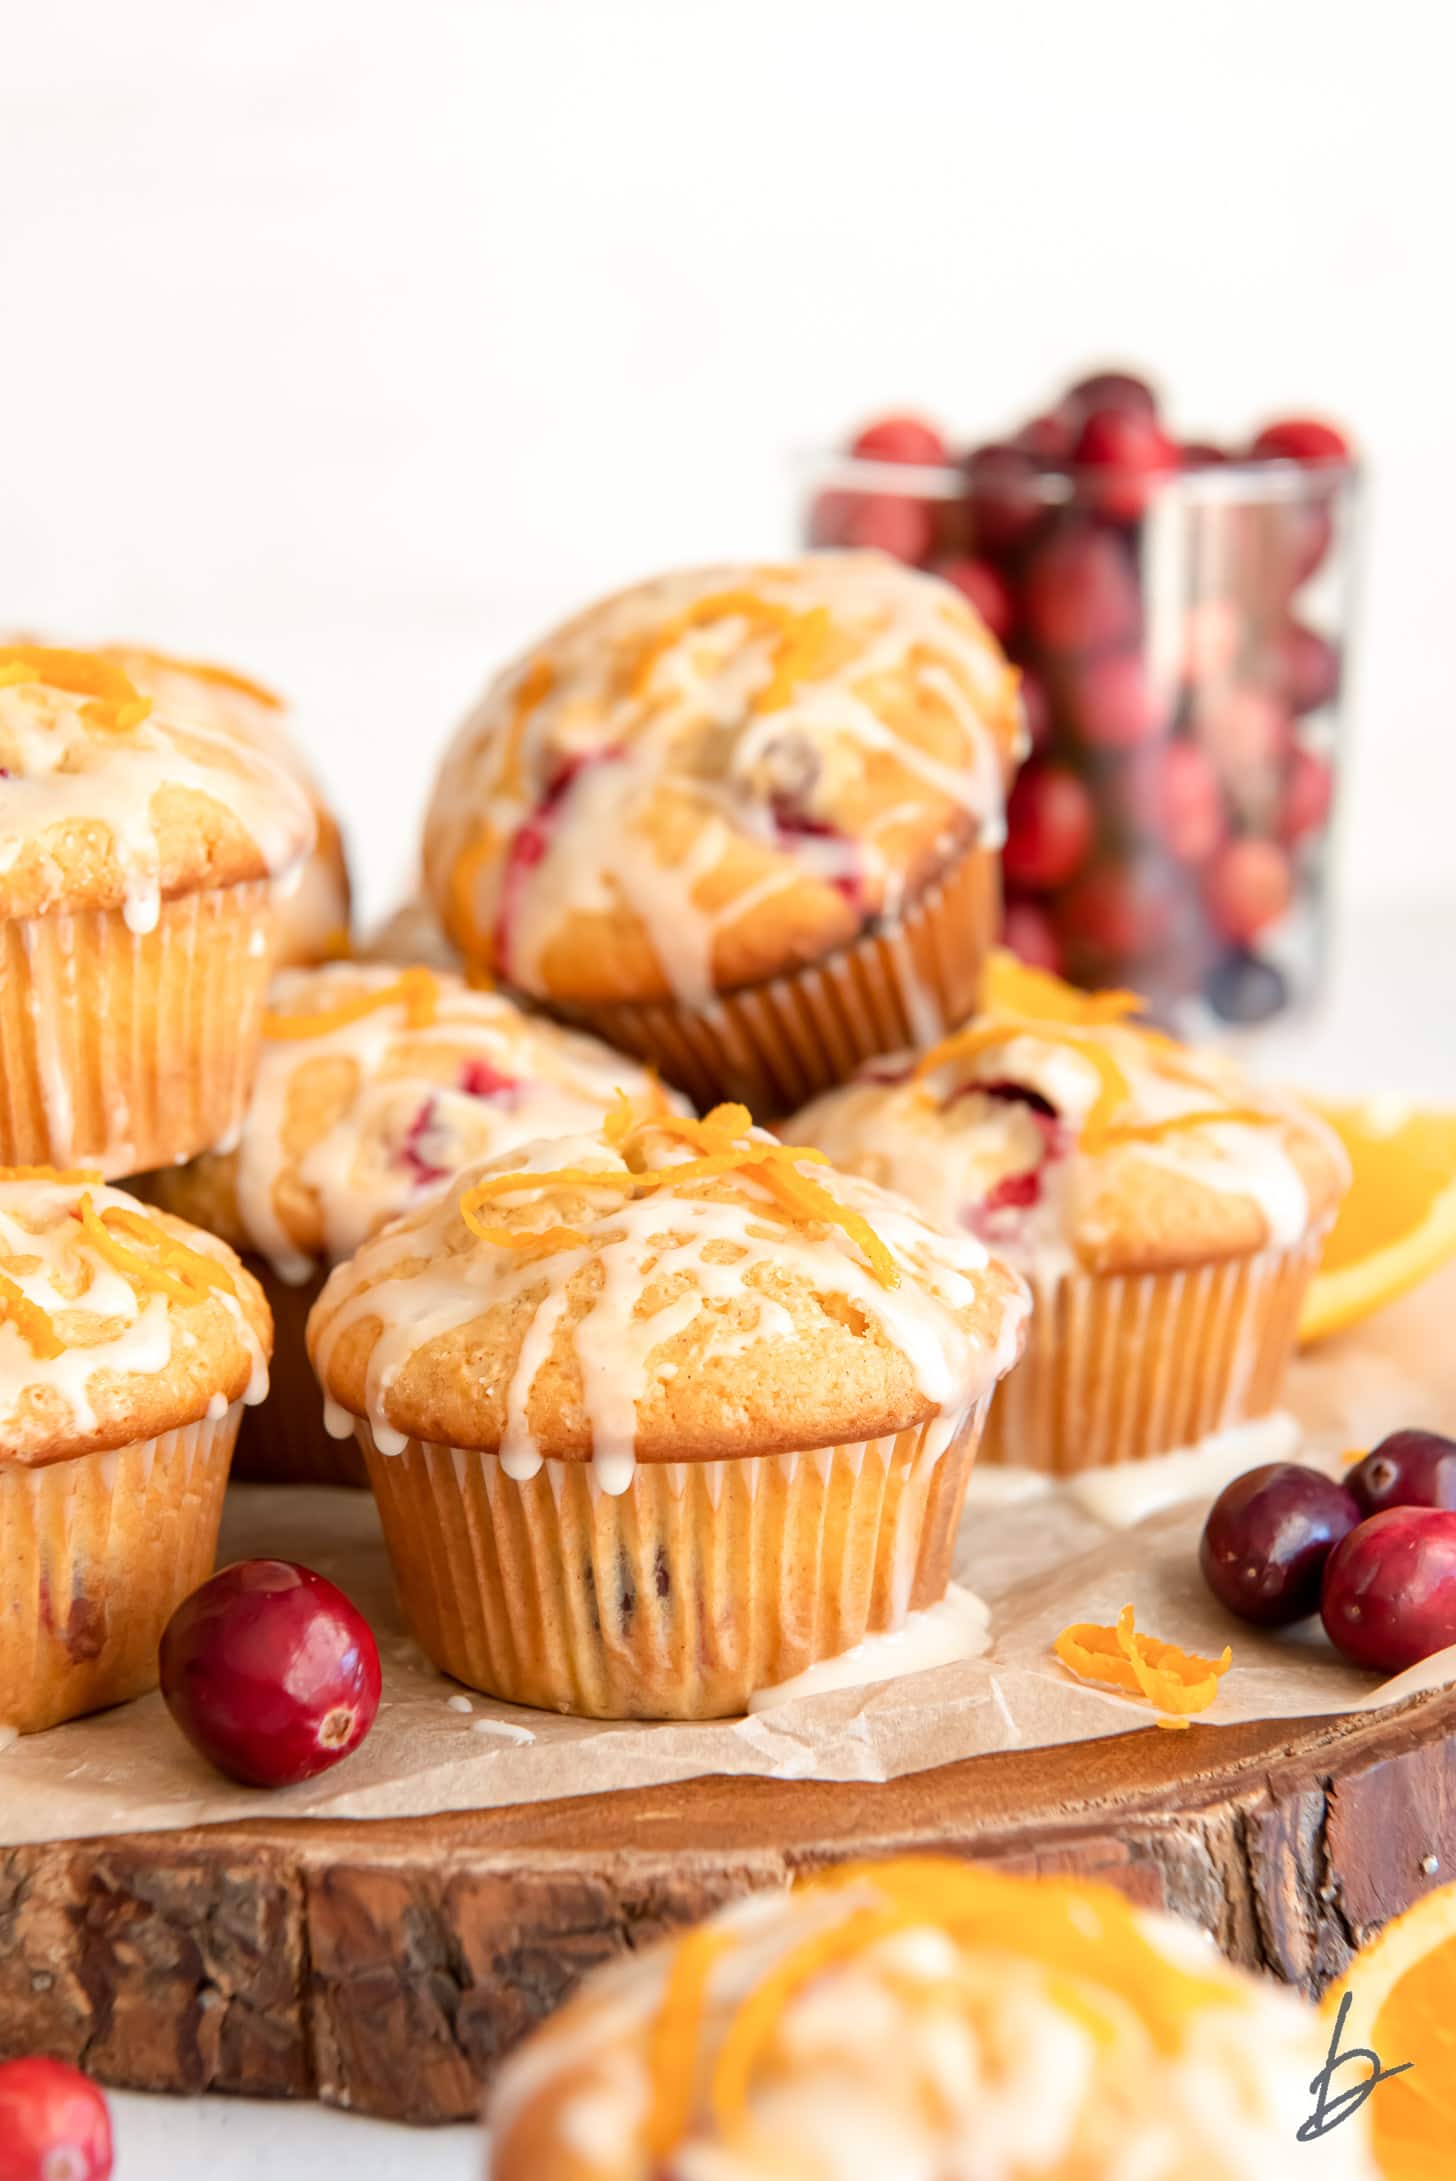 cranberry orange muffins with glaze piled on wood tray